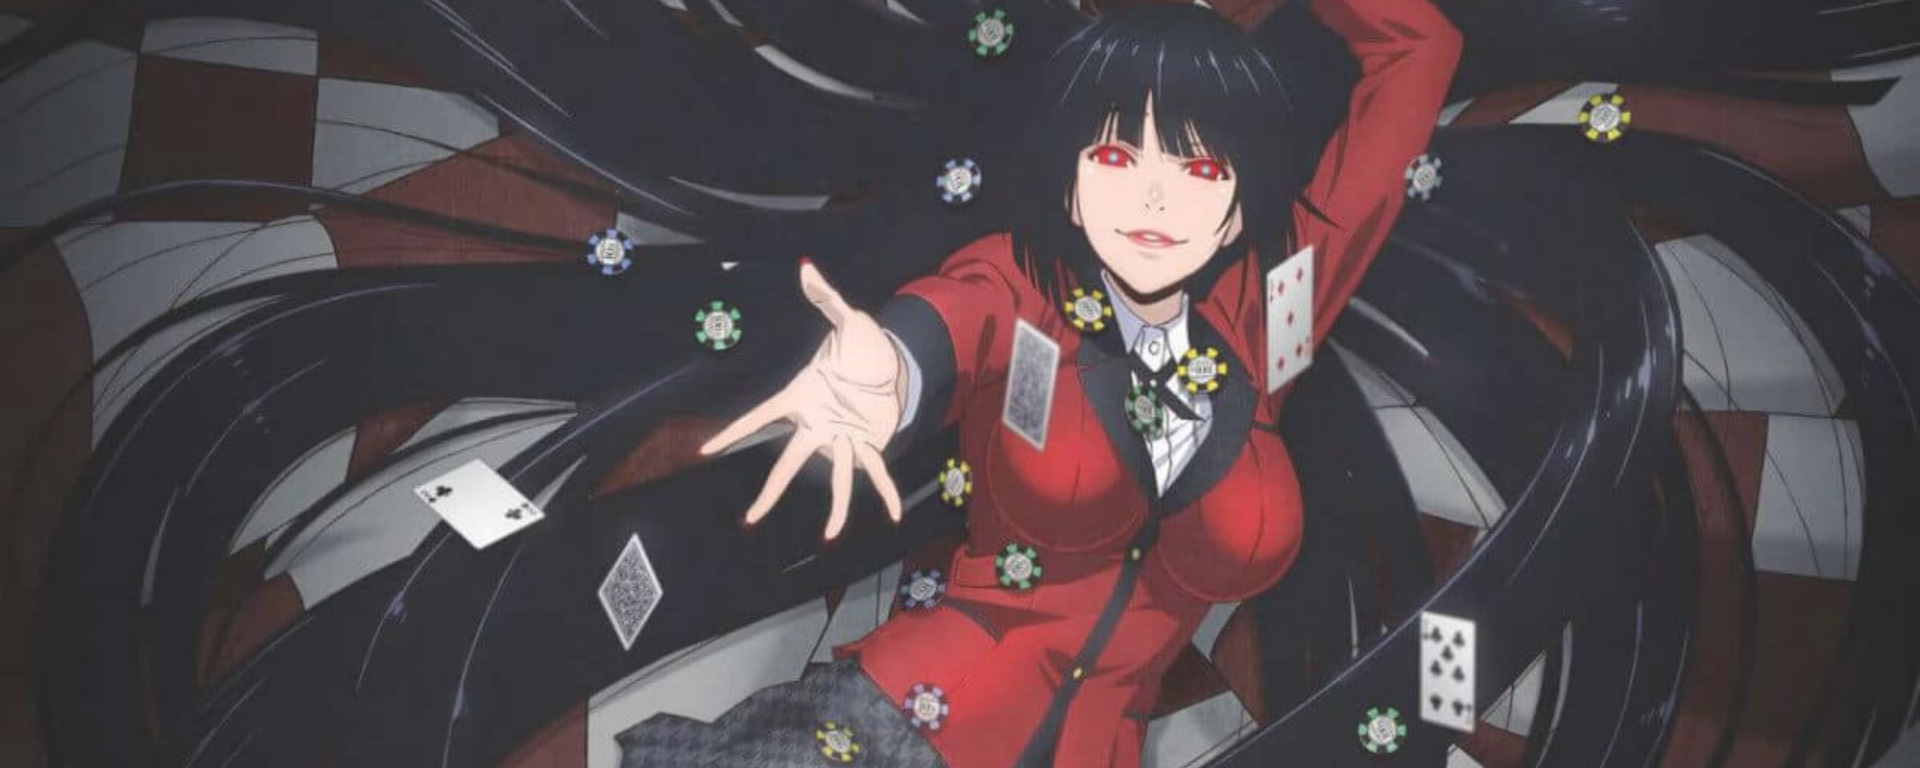 Anime character playing poker in kakegurui uniform